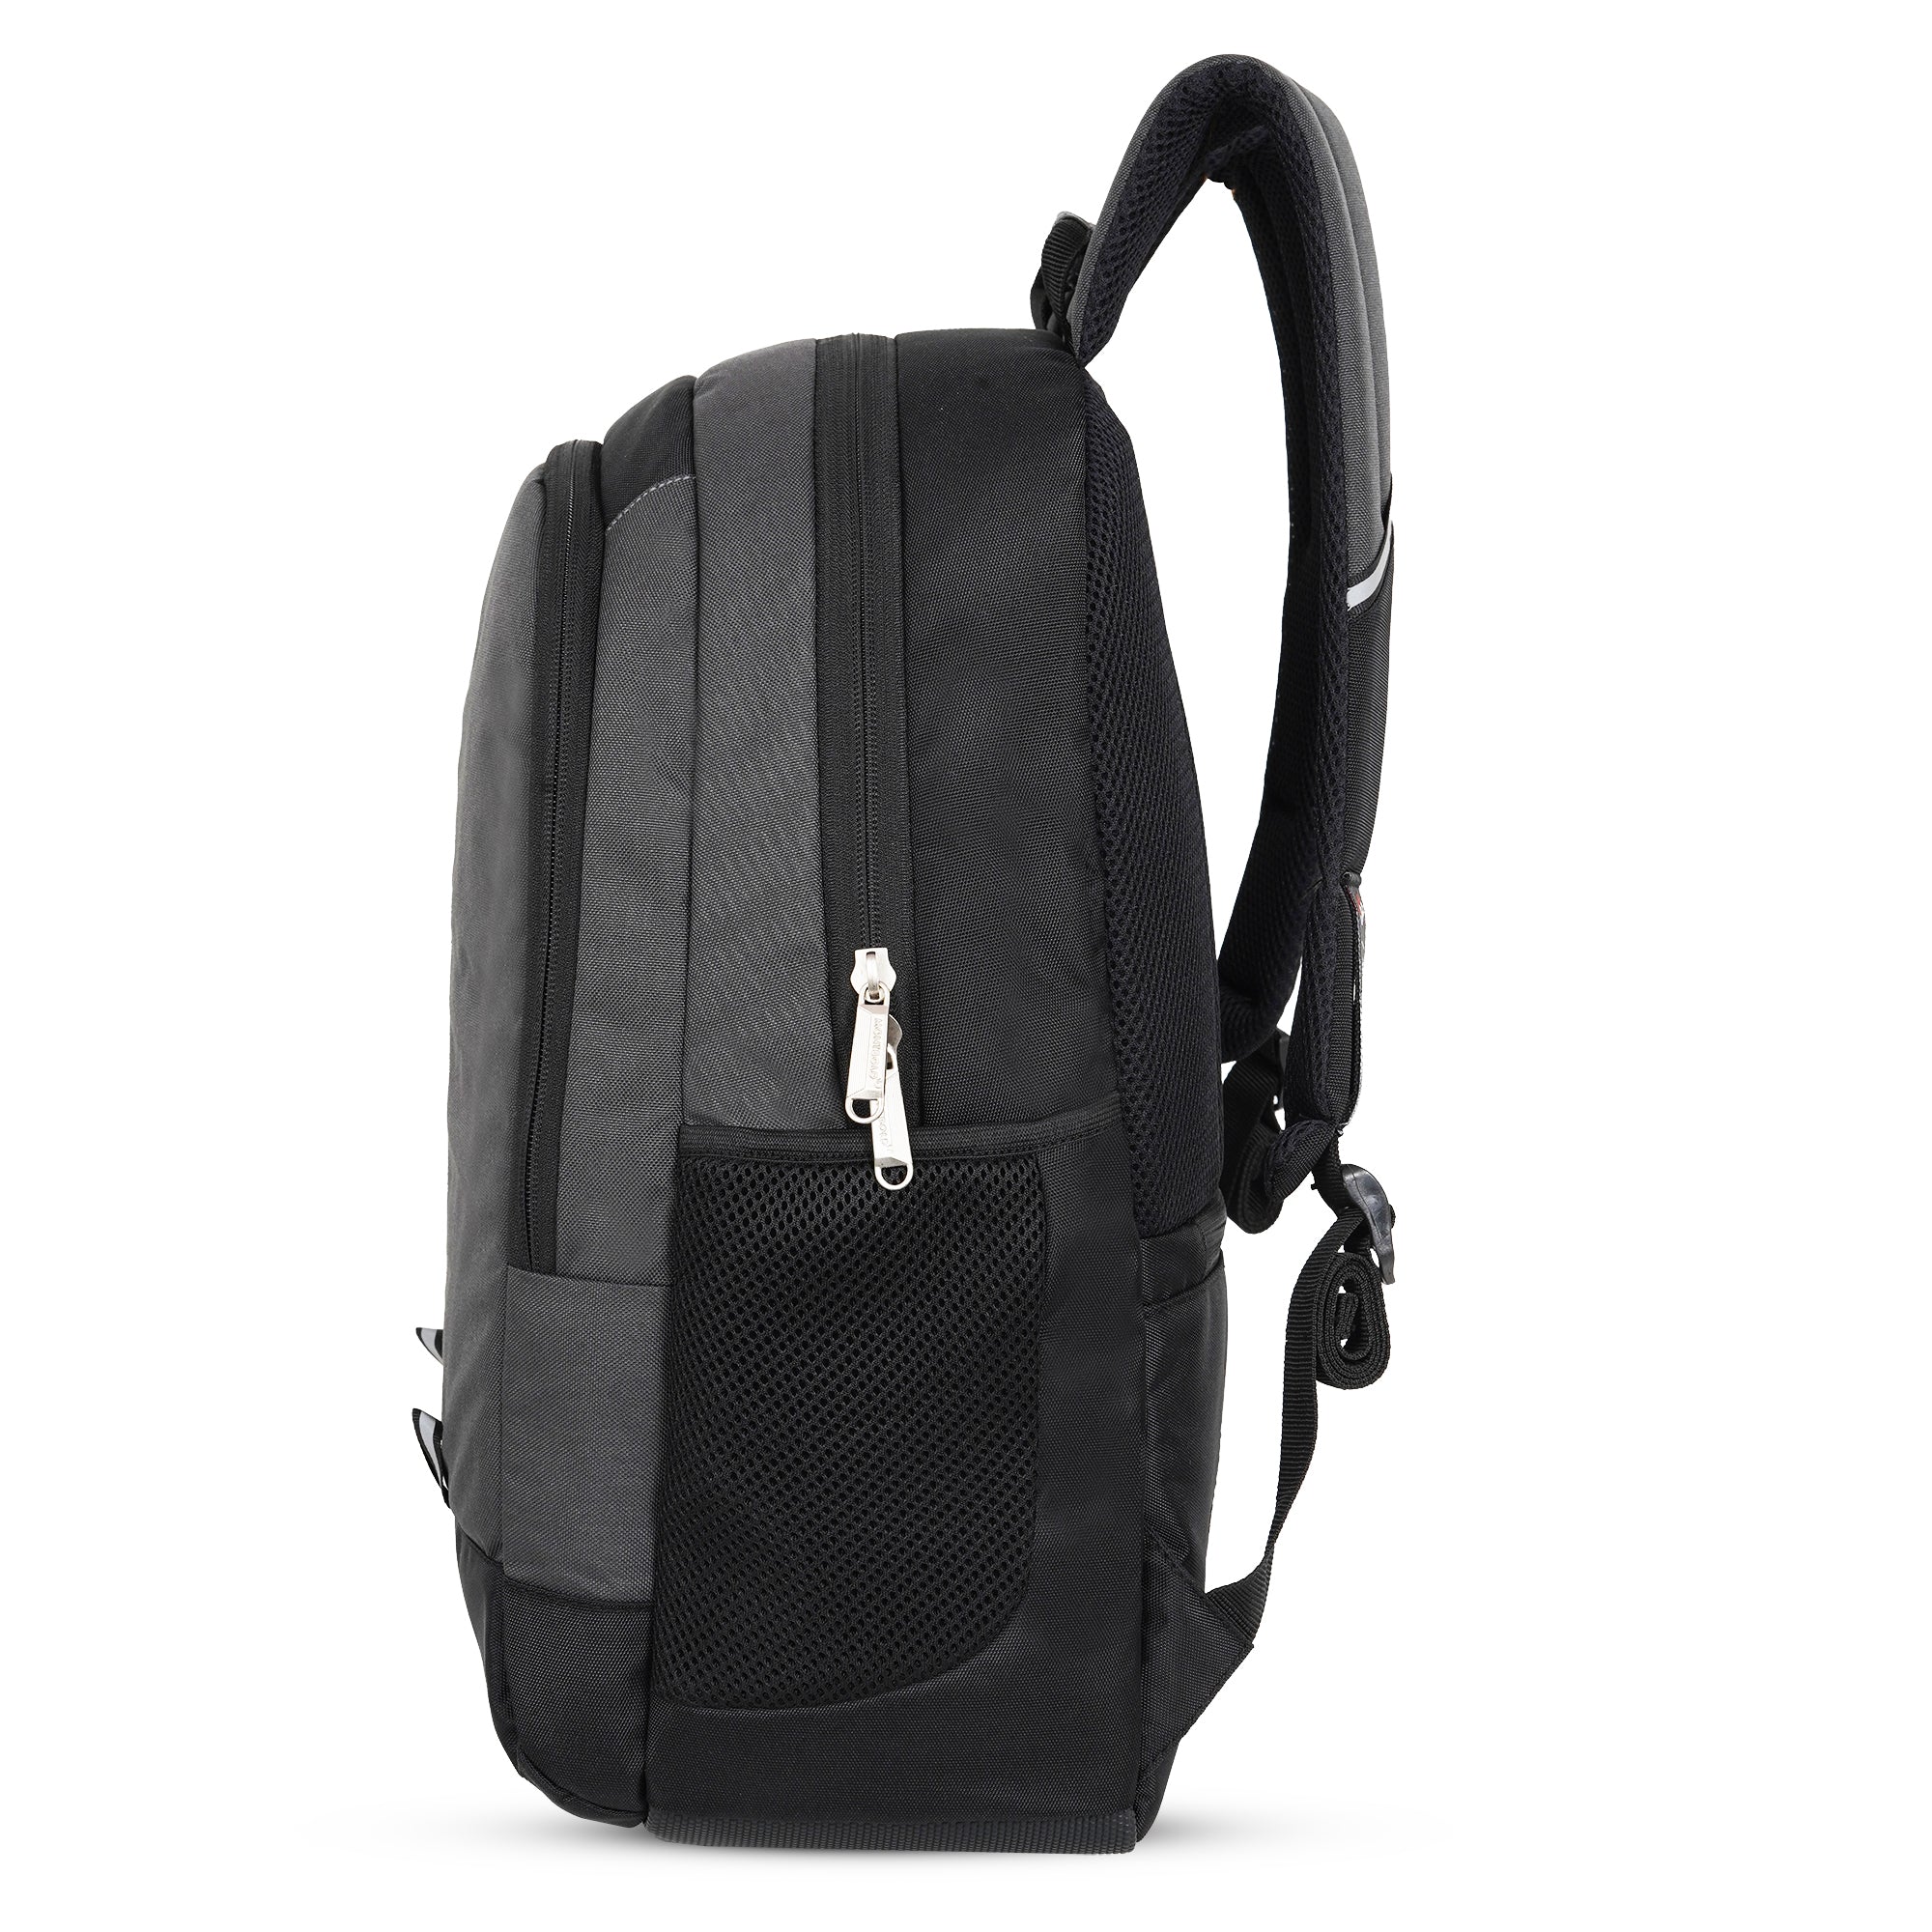 Buy Backpack Online At Best Price From montbold.com – Montbold